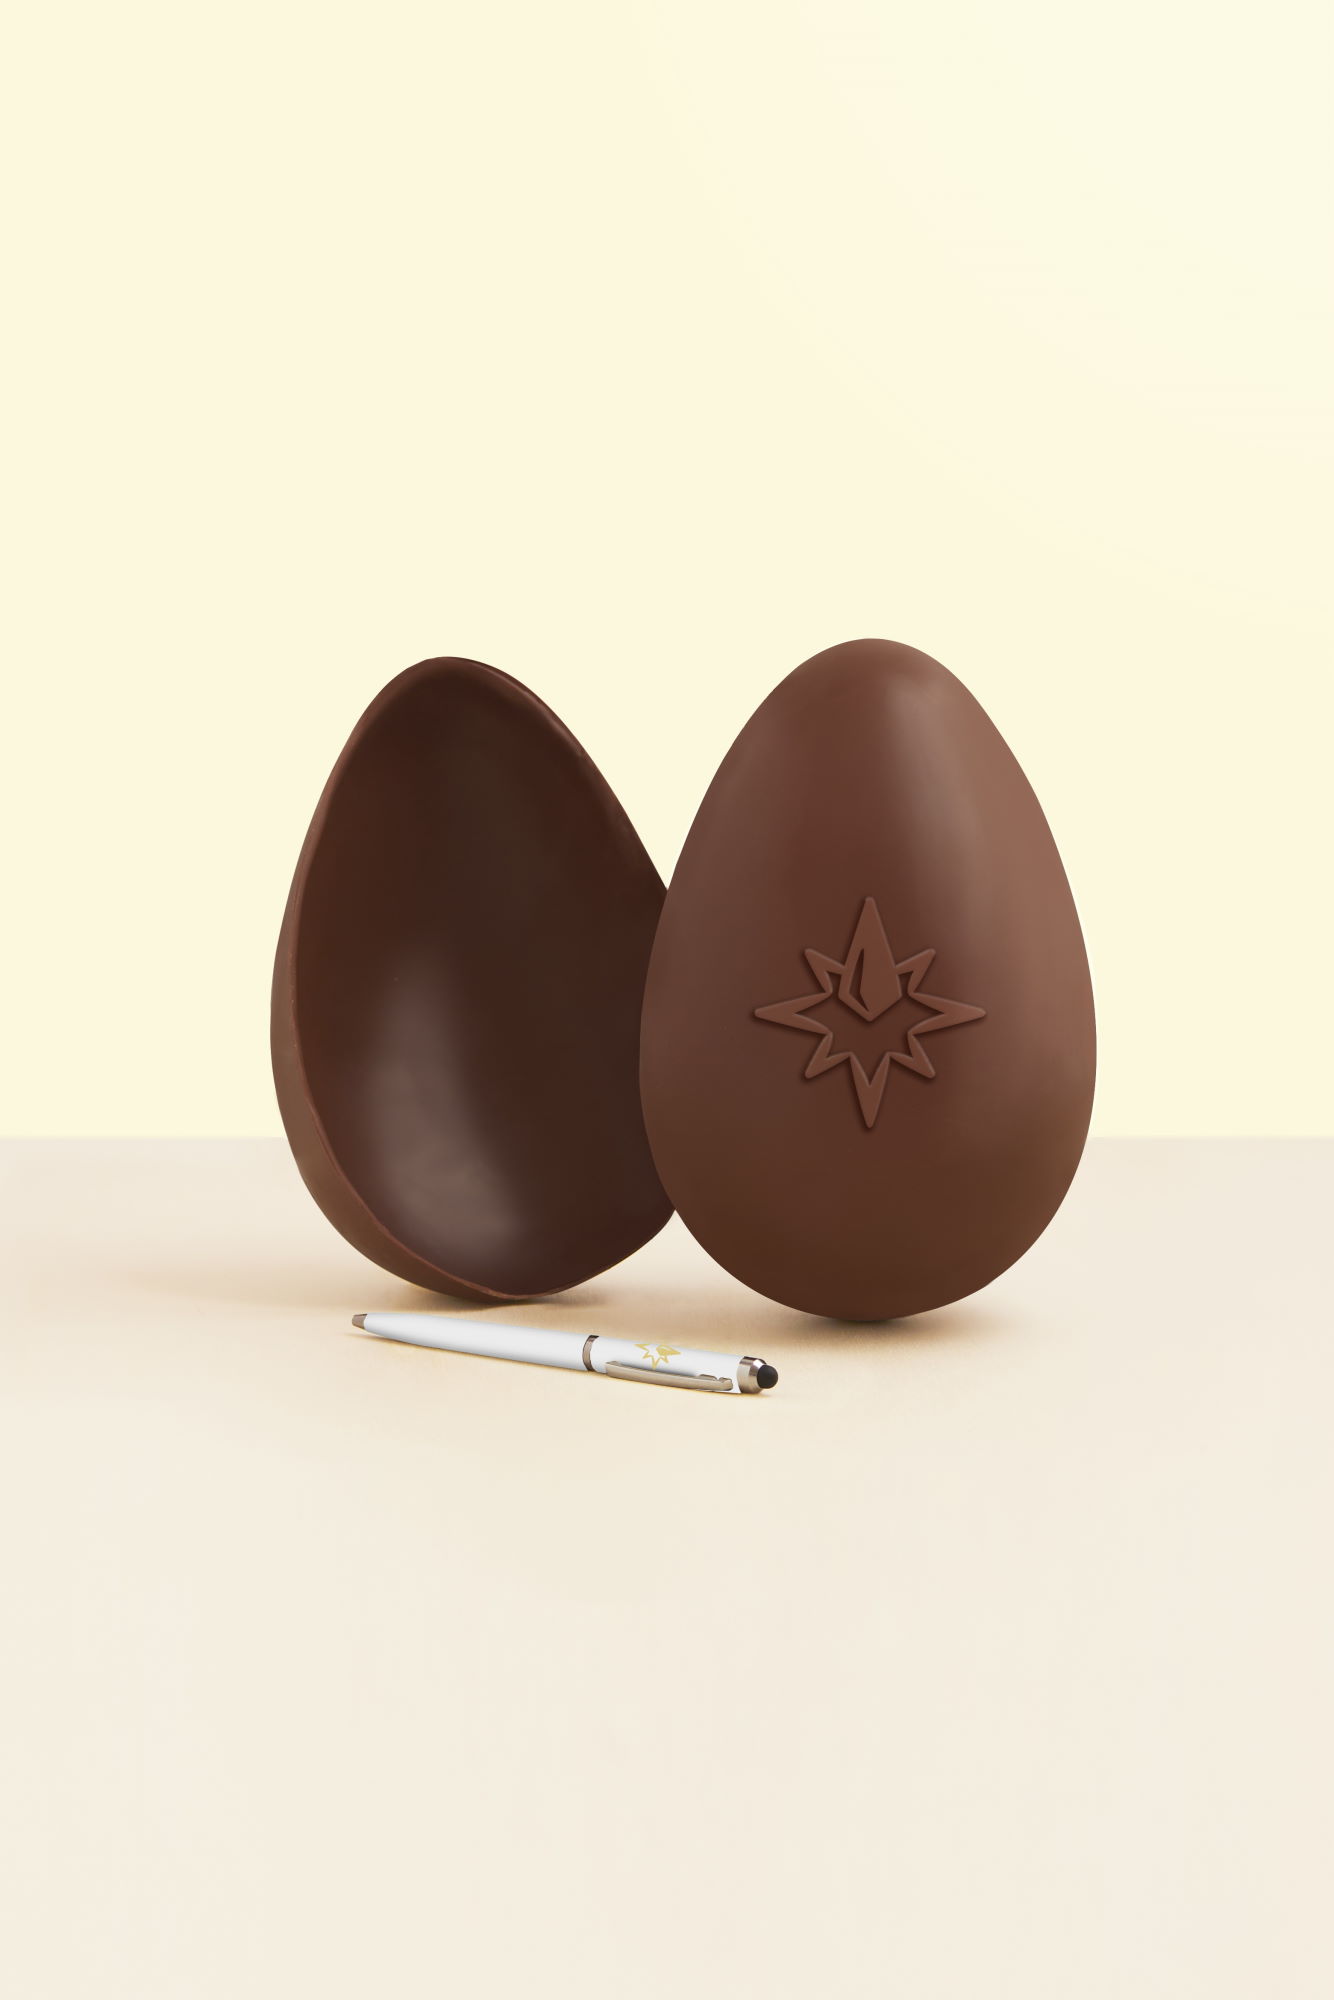 Domori Chocolate Easter Eggs Lifestyle